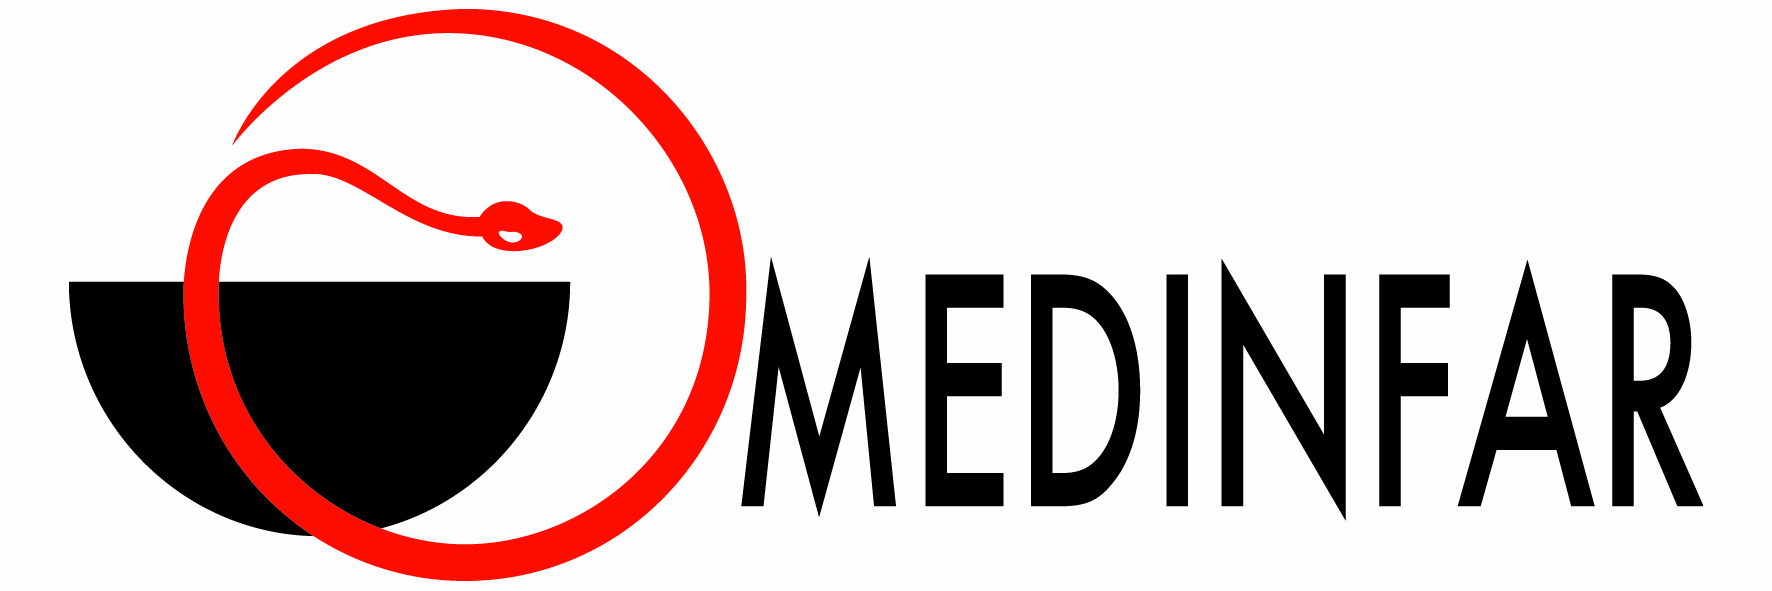 Medinfar Logo photo - 1